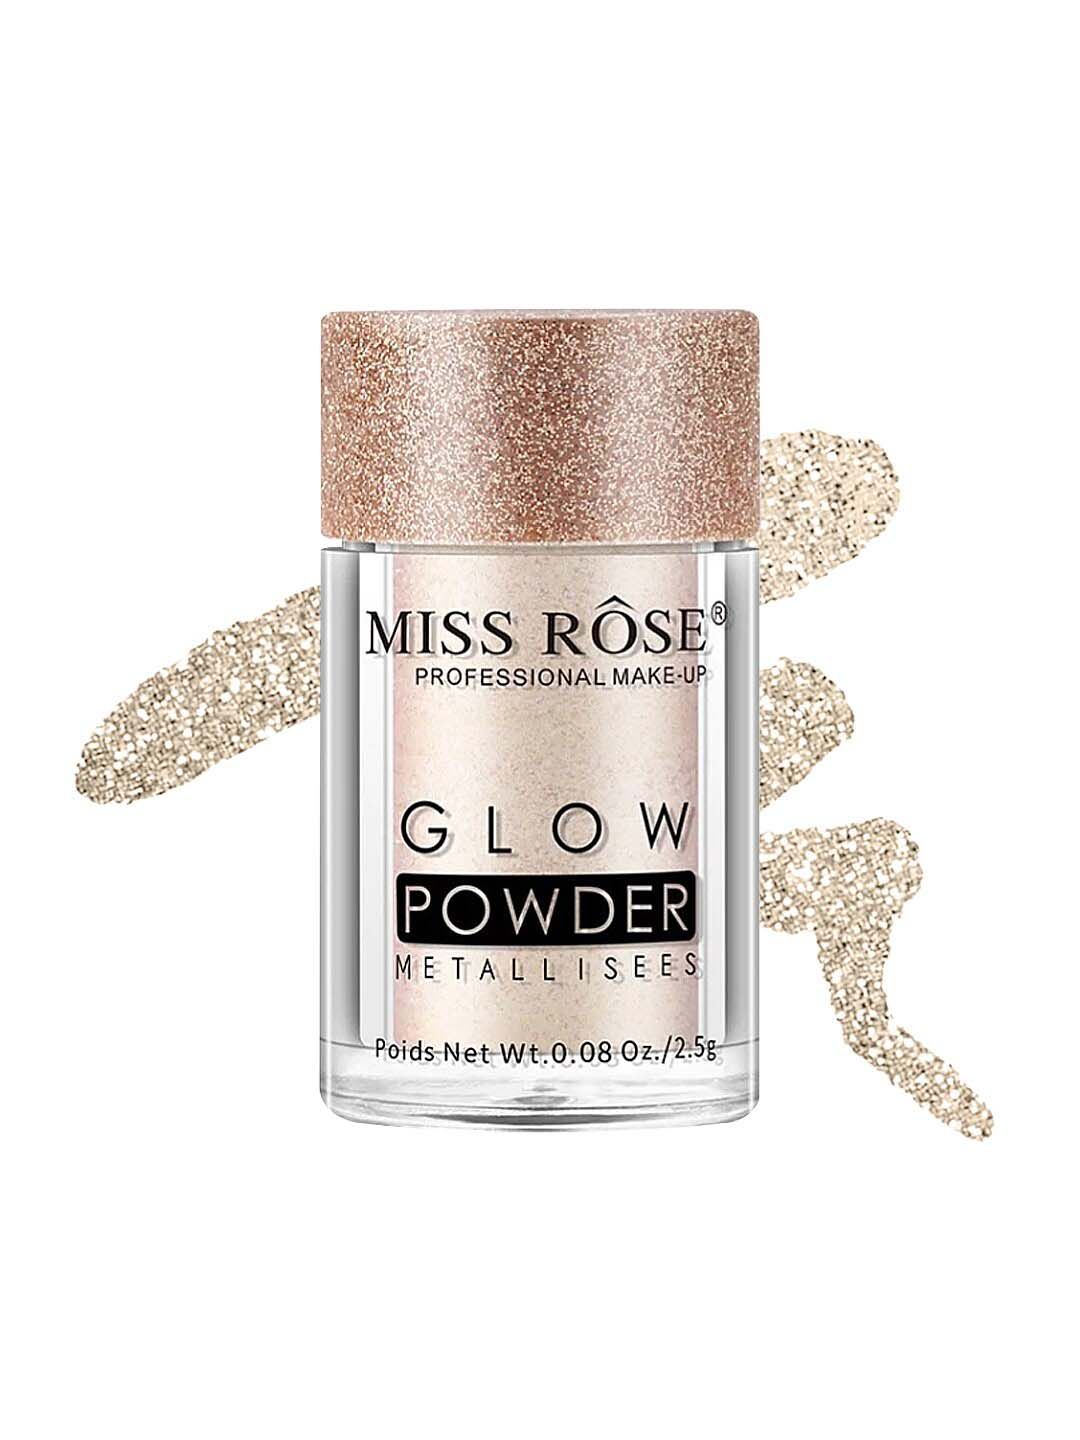 MISS ROSE Pigment Eyeshadow Glow Powder Metalises 7001-010M14 Price in India